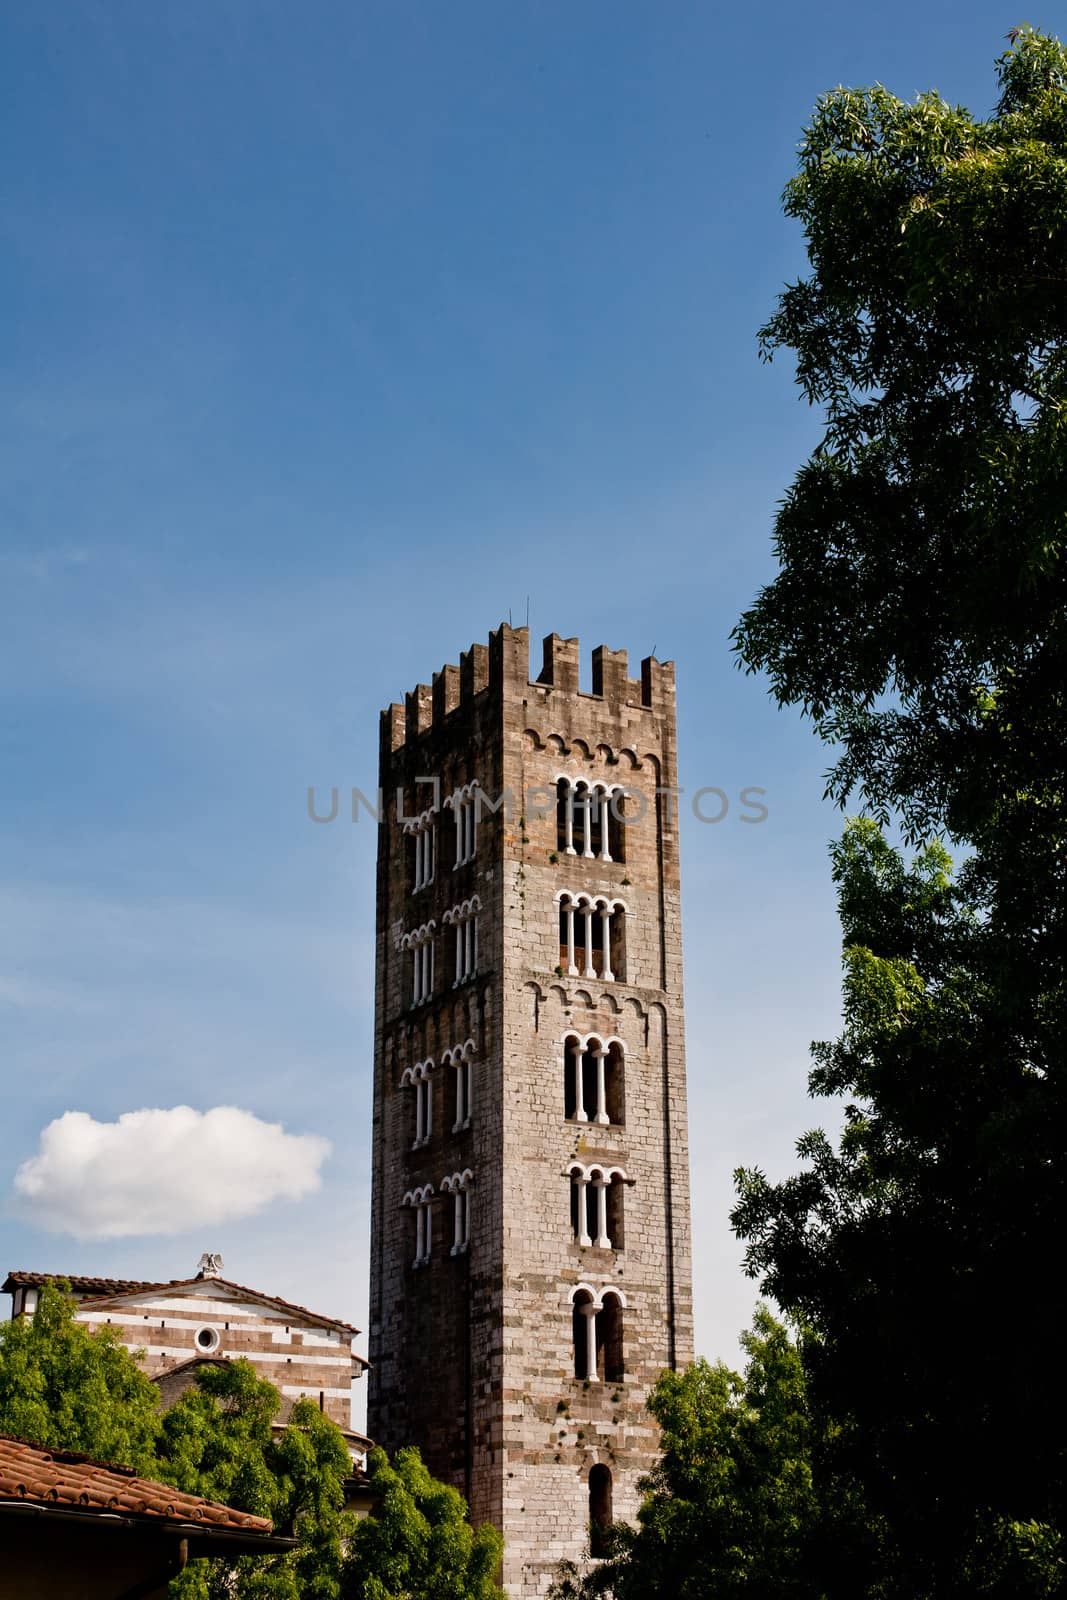 Tower by foaloce